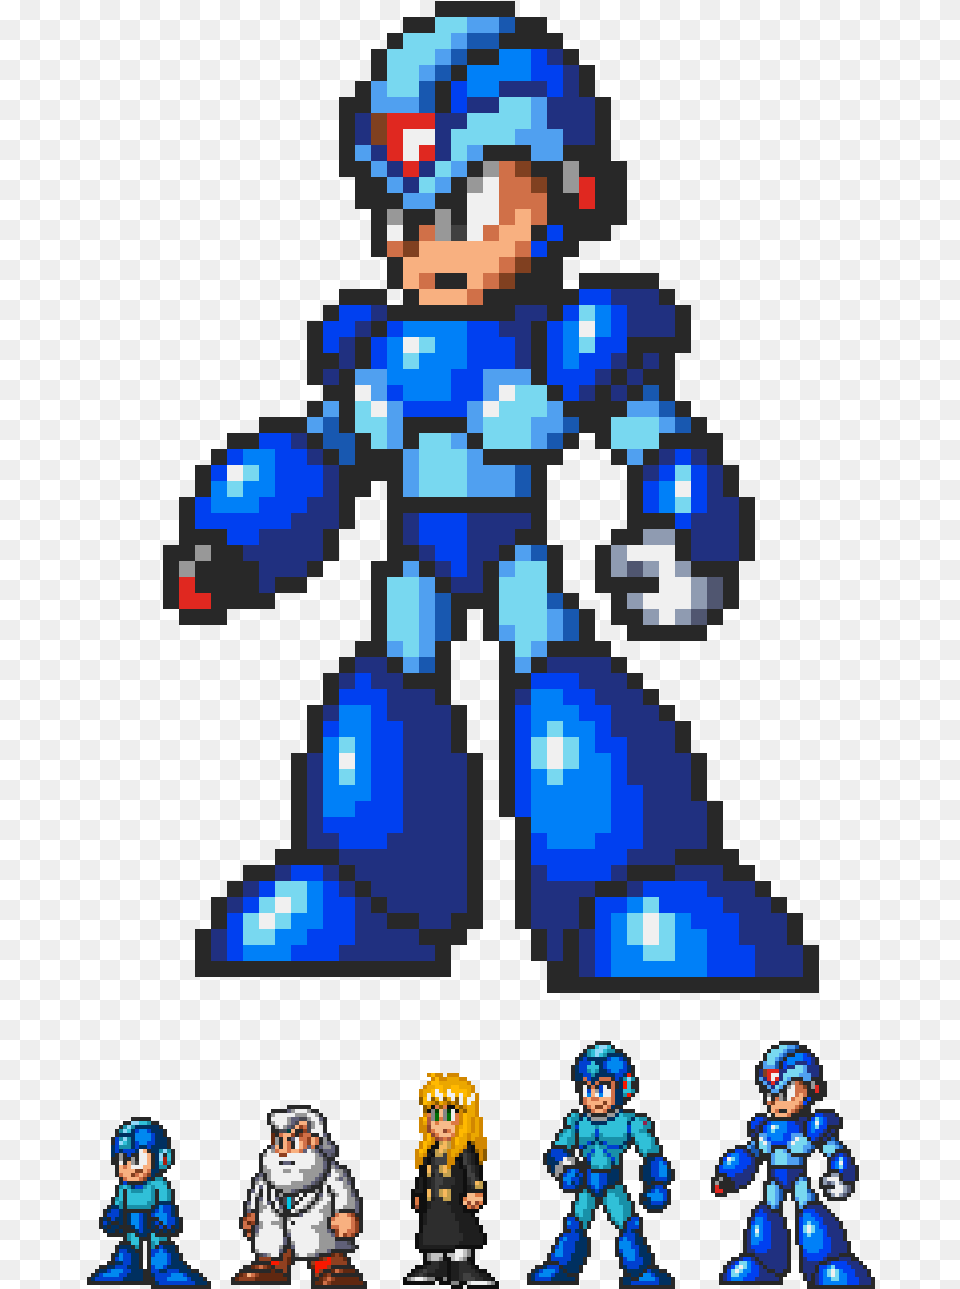 Image Result For Megaman X 32 Bits Sprites 32 Bit Mega Man X Sprite, Person, Animal, Bird, Game Free Transparent Png